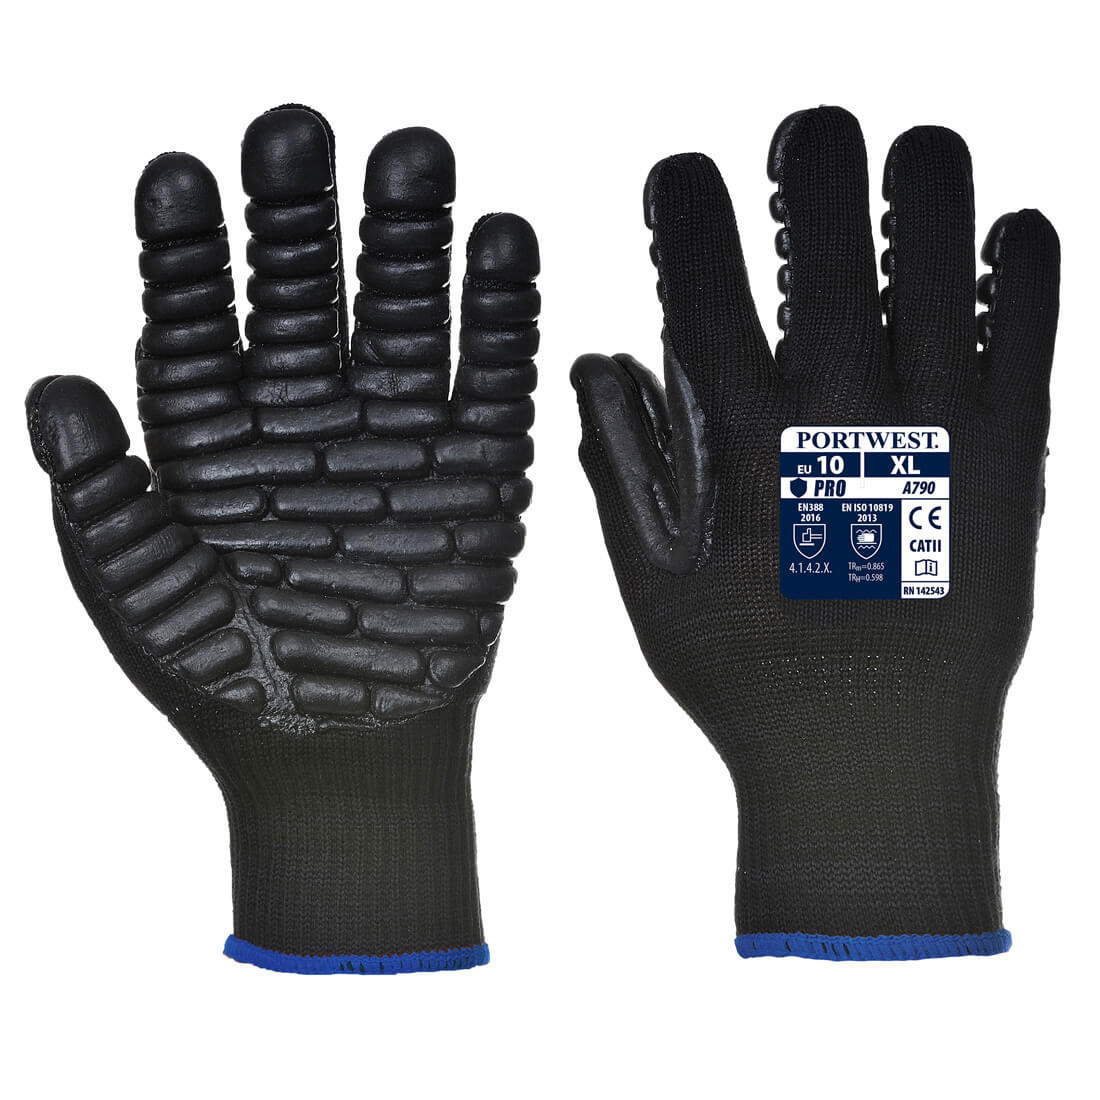 Anti Vibration Glove - Personal protection